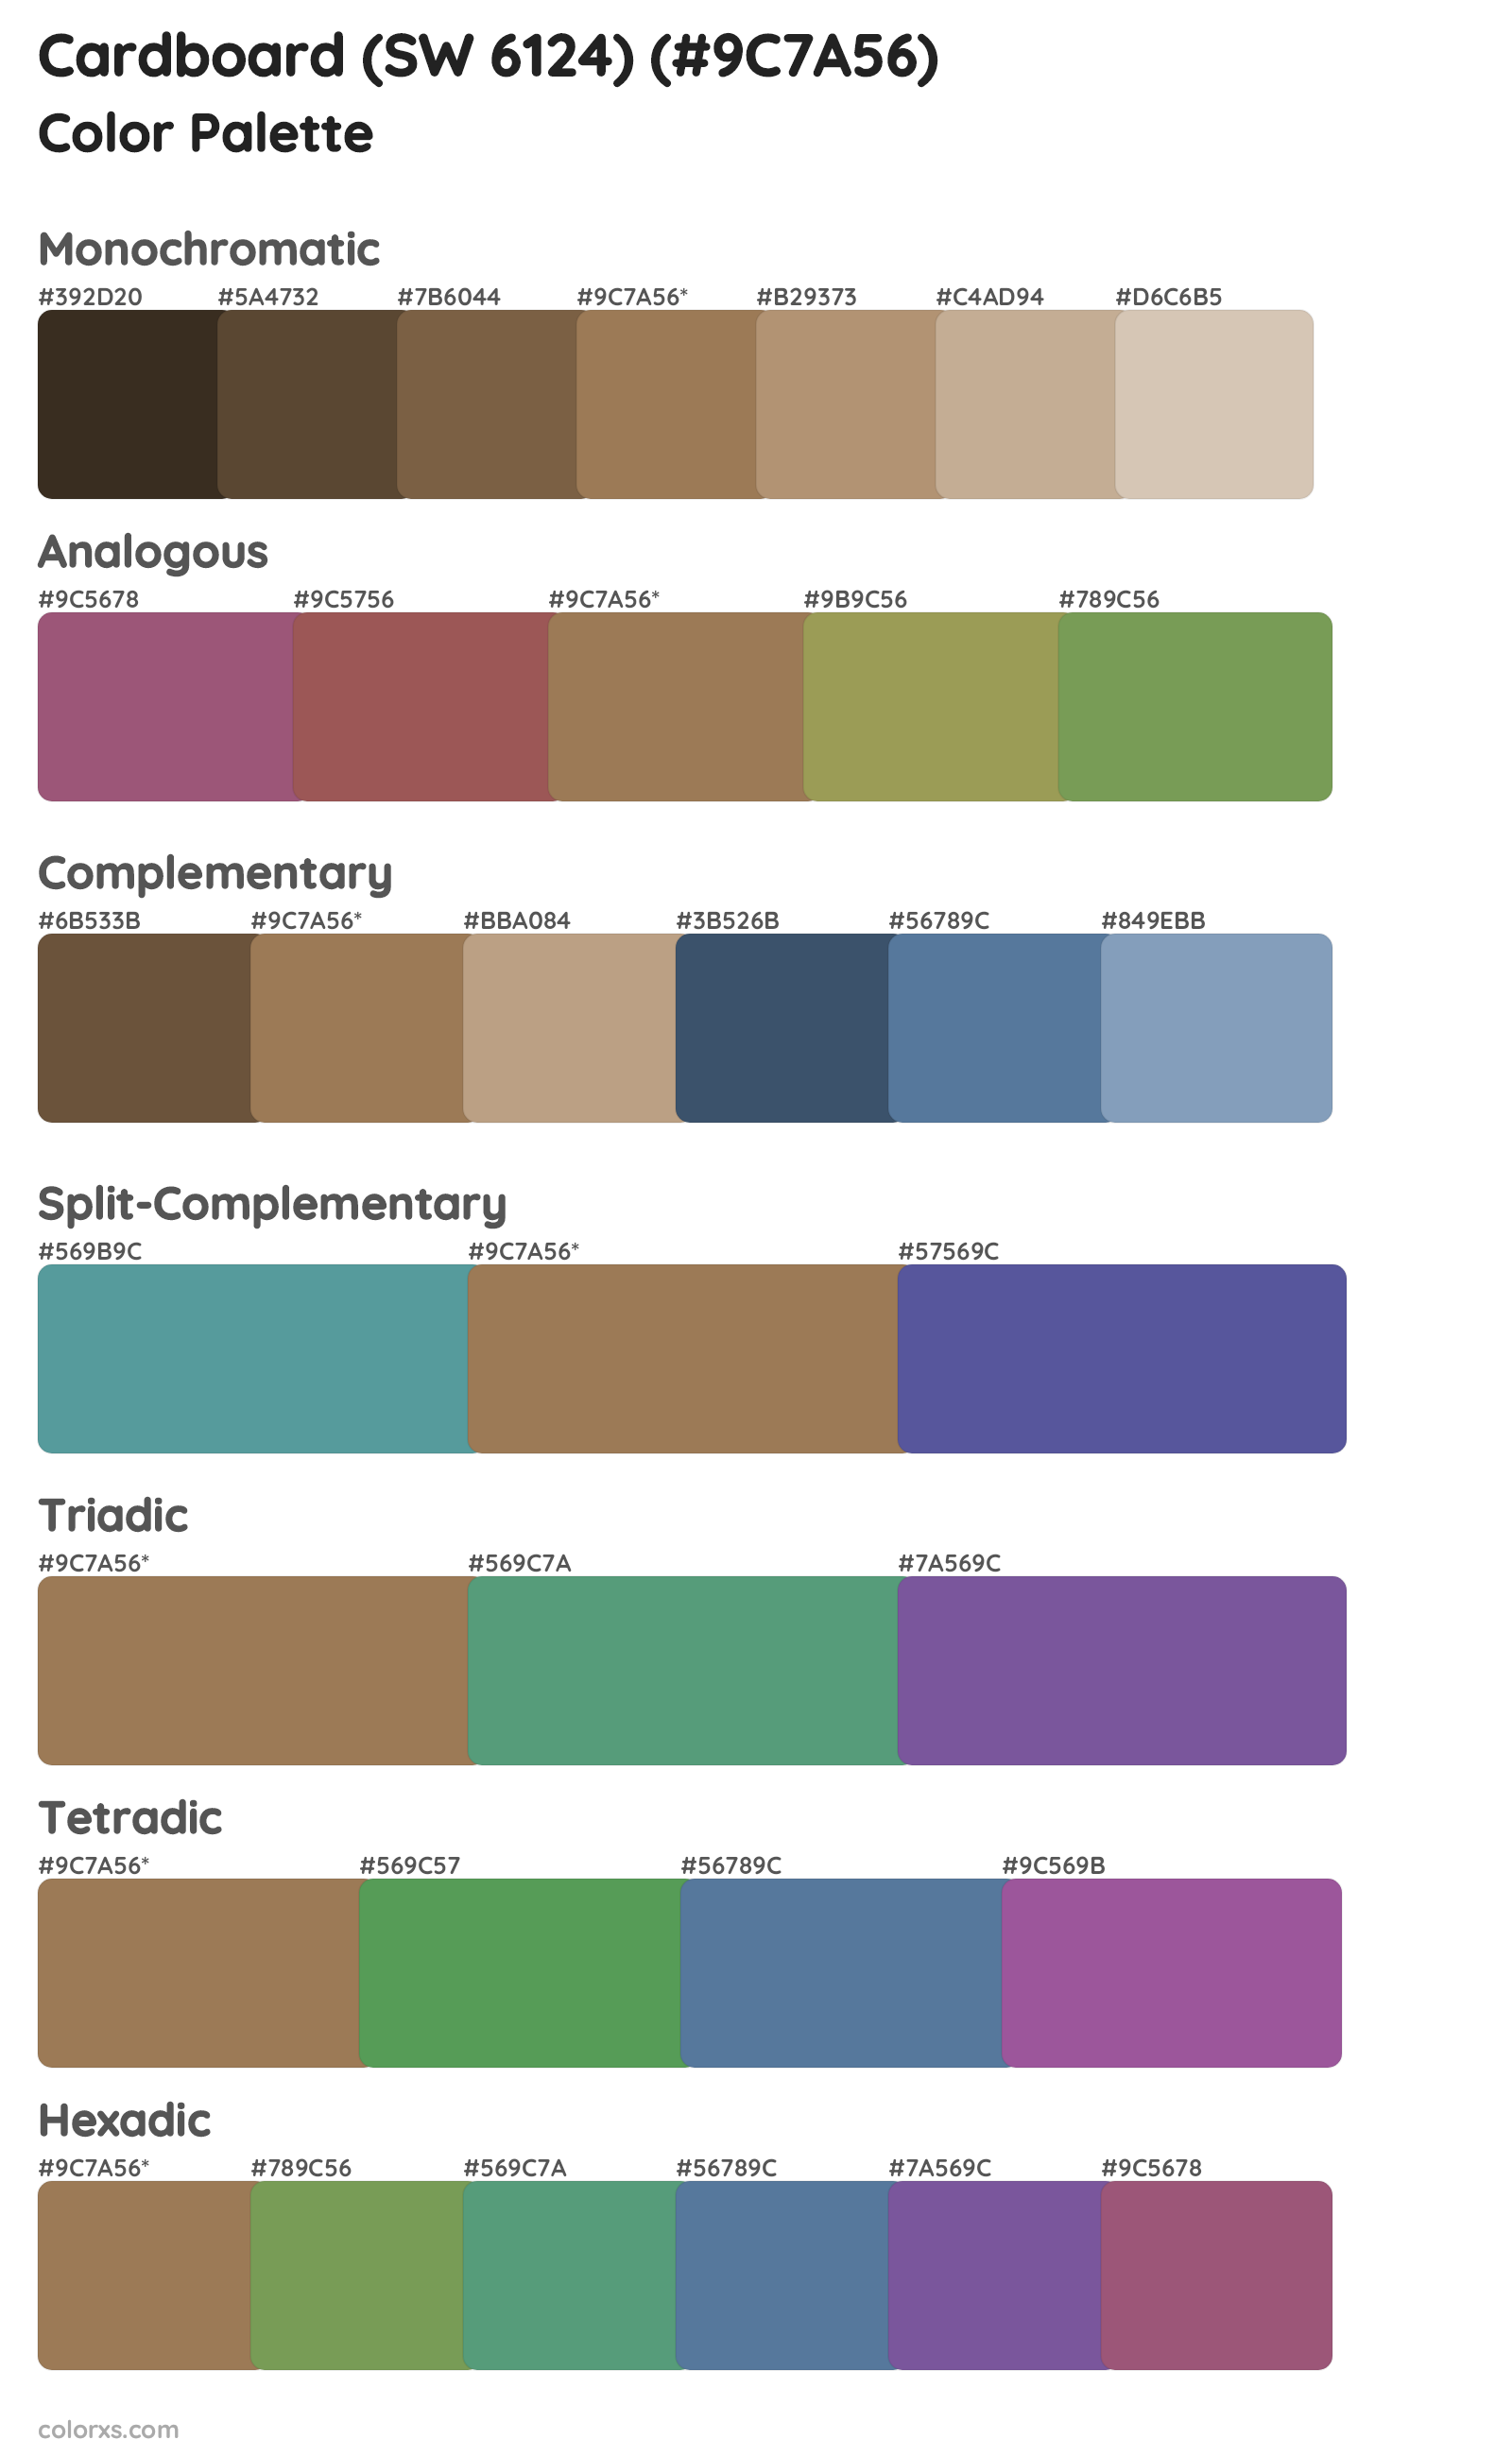 Cardboard (SW 6124) Color Scheme Palettes